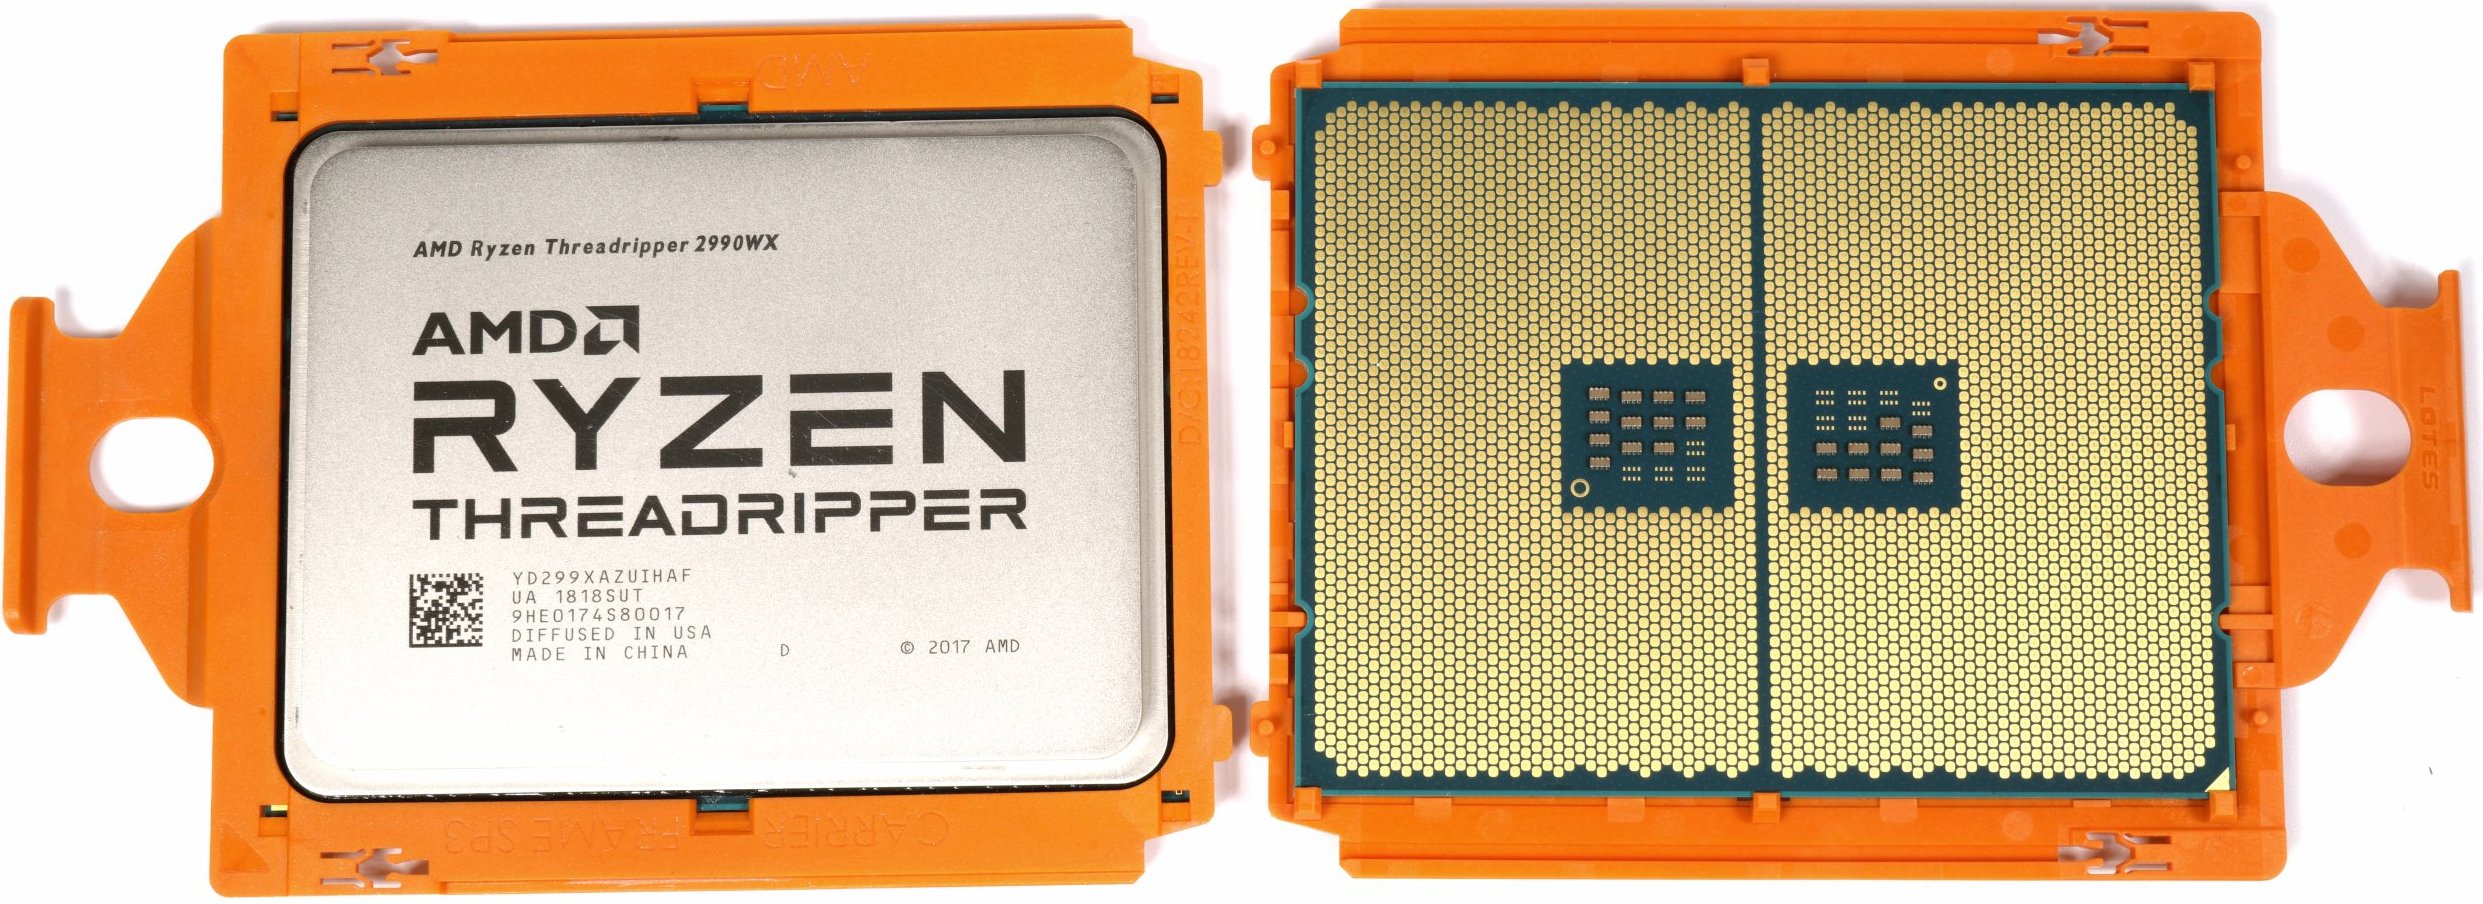 AMD Ryzen Threadripper 2990WX and 2950X in review - Real progress